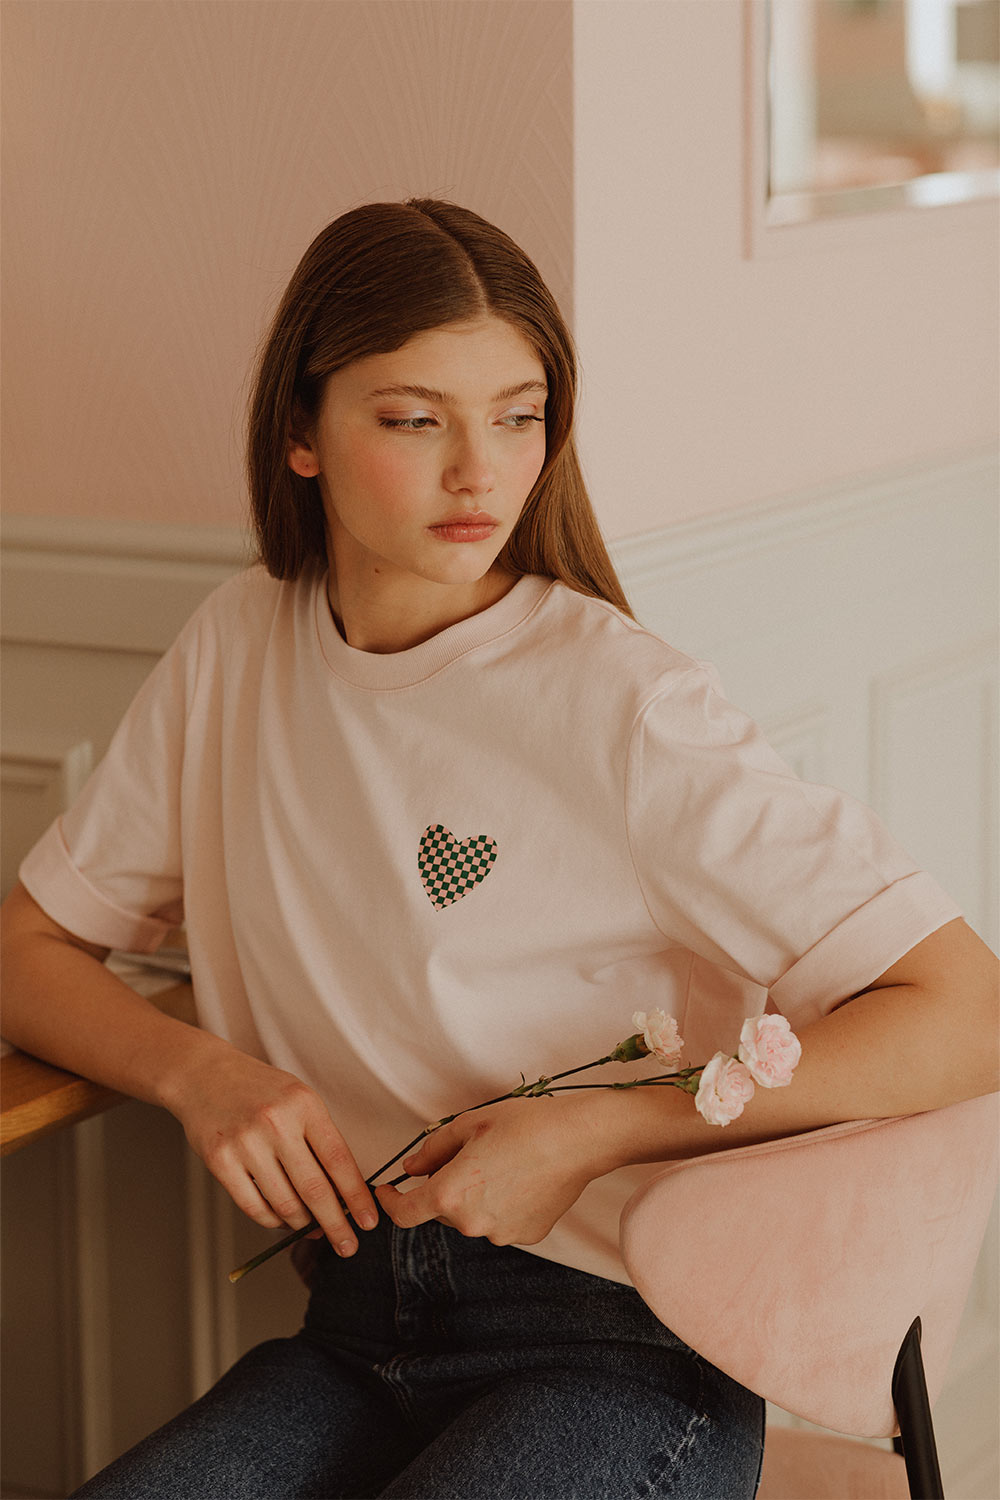 Woman wearing light pink t-shirt with heart print by Romanian designer Mauverien.